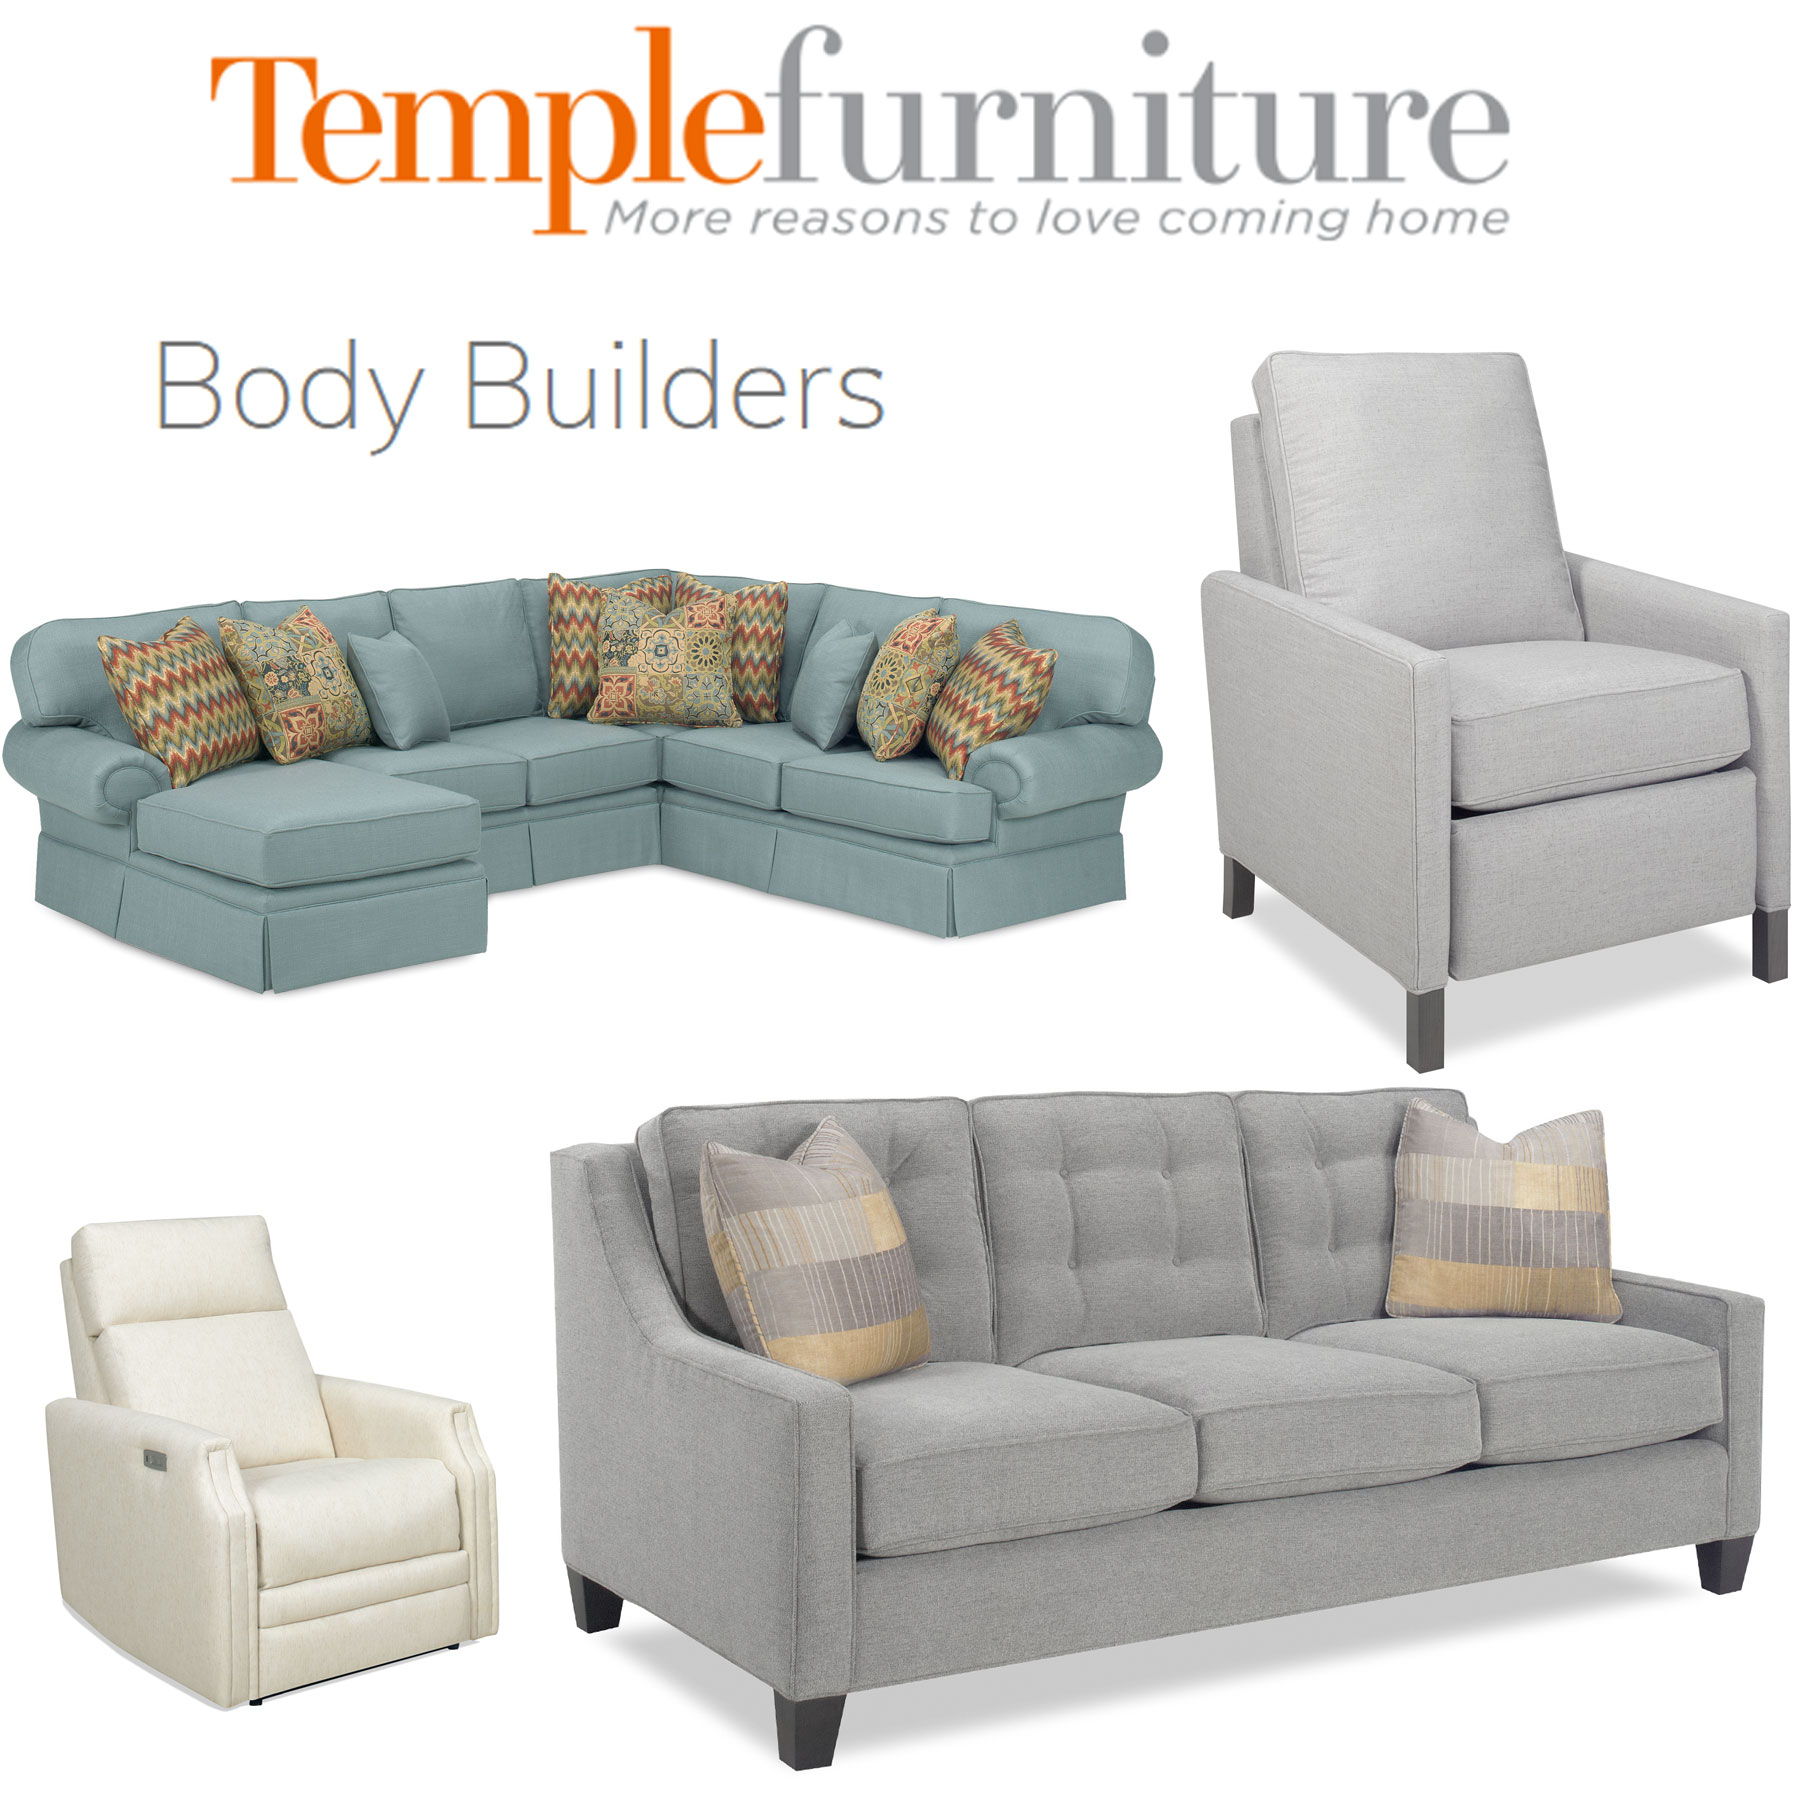   Temple Furniture Body Builder Program